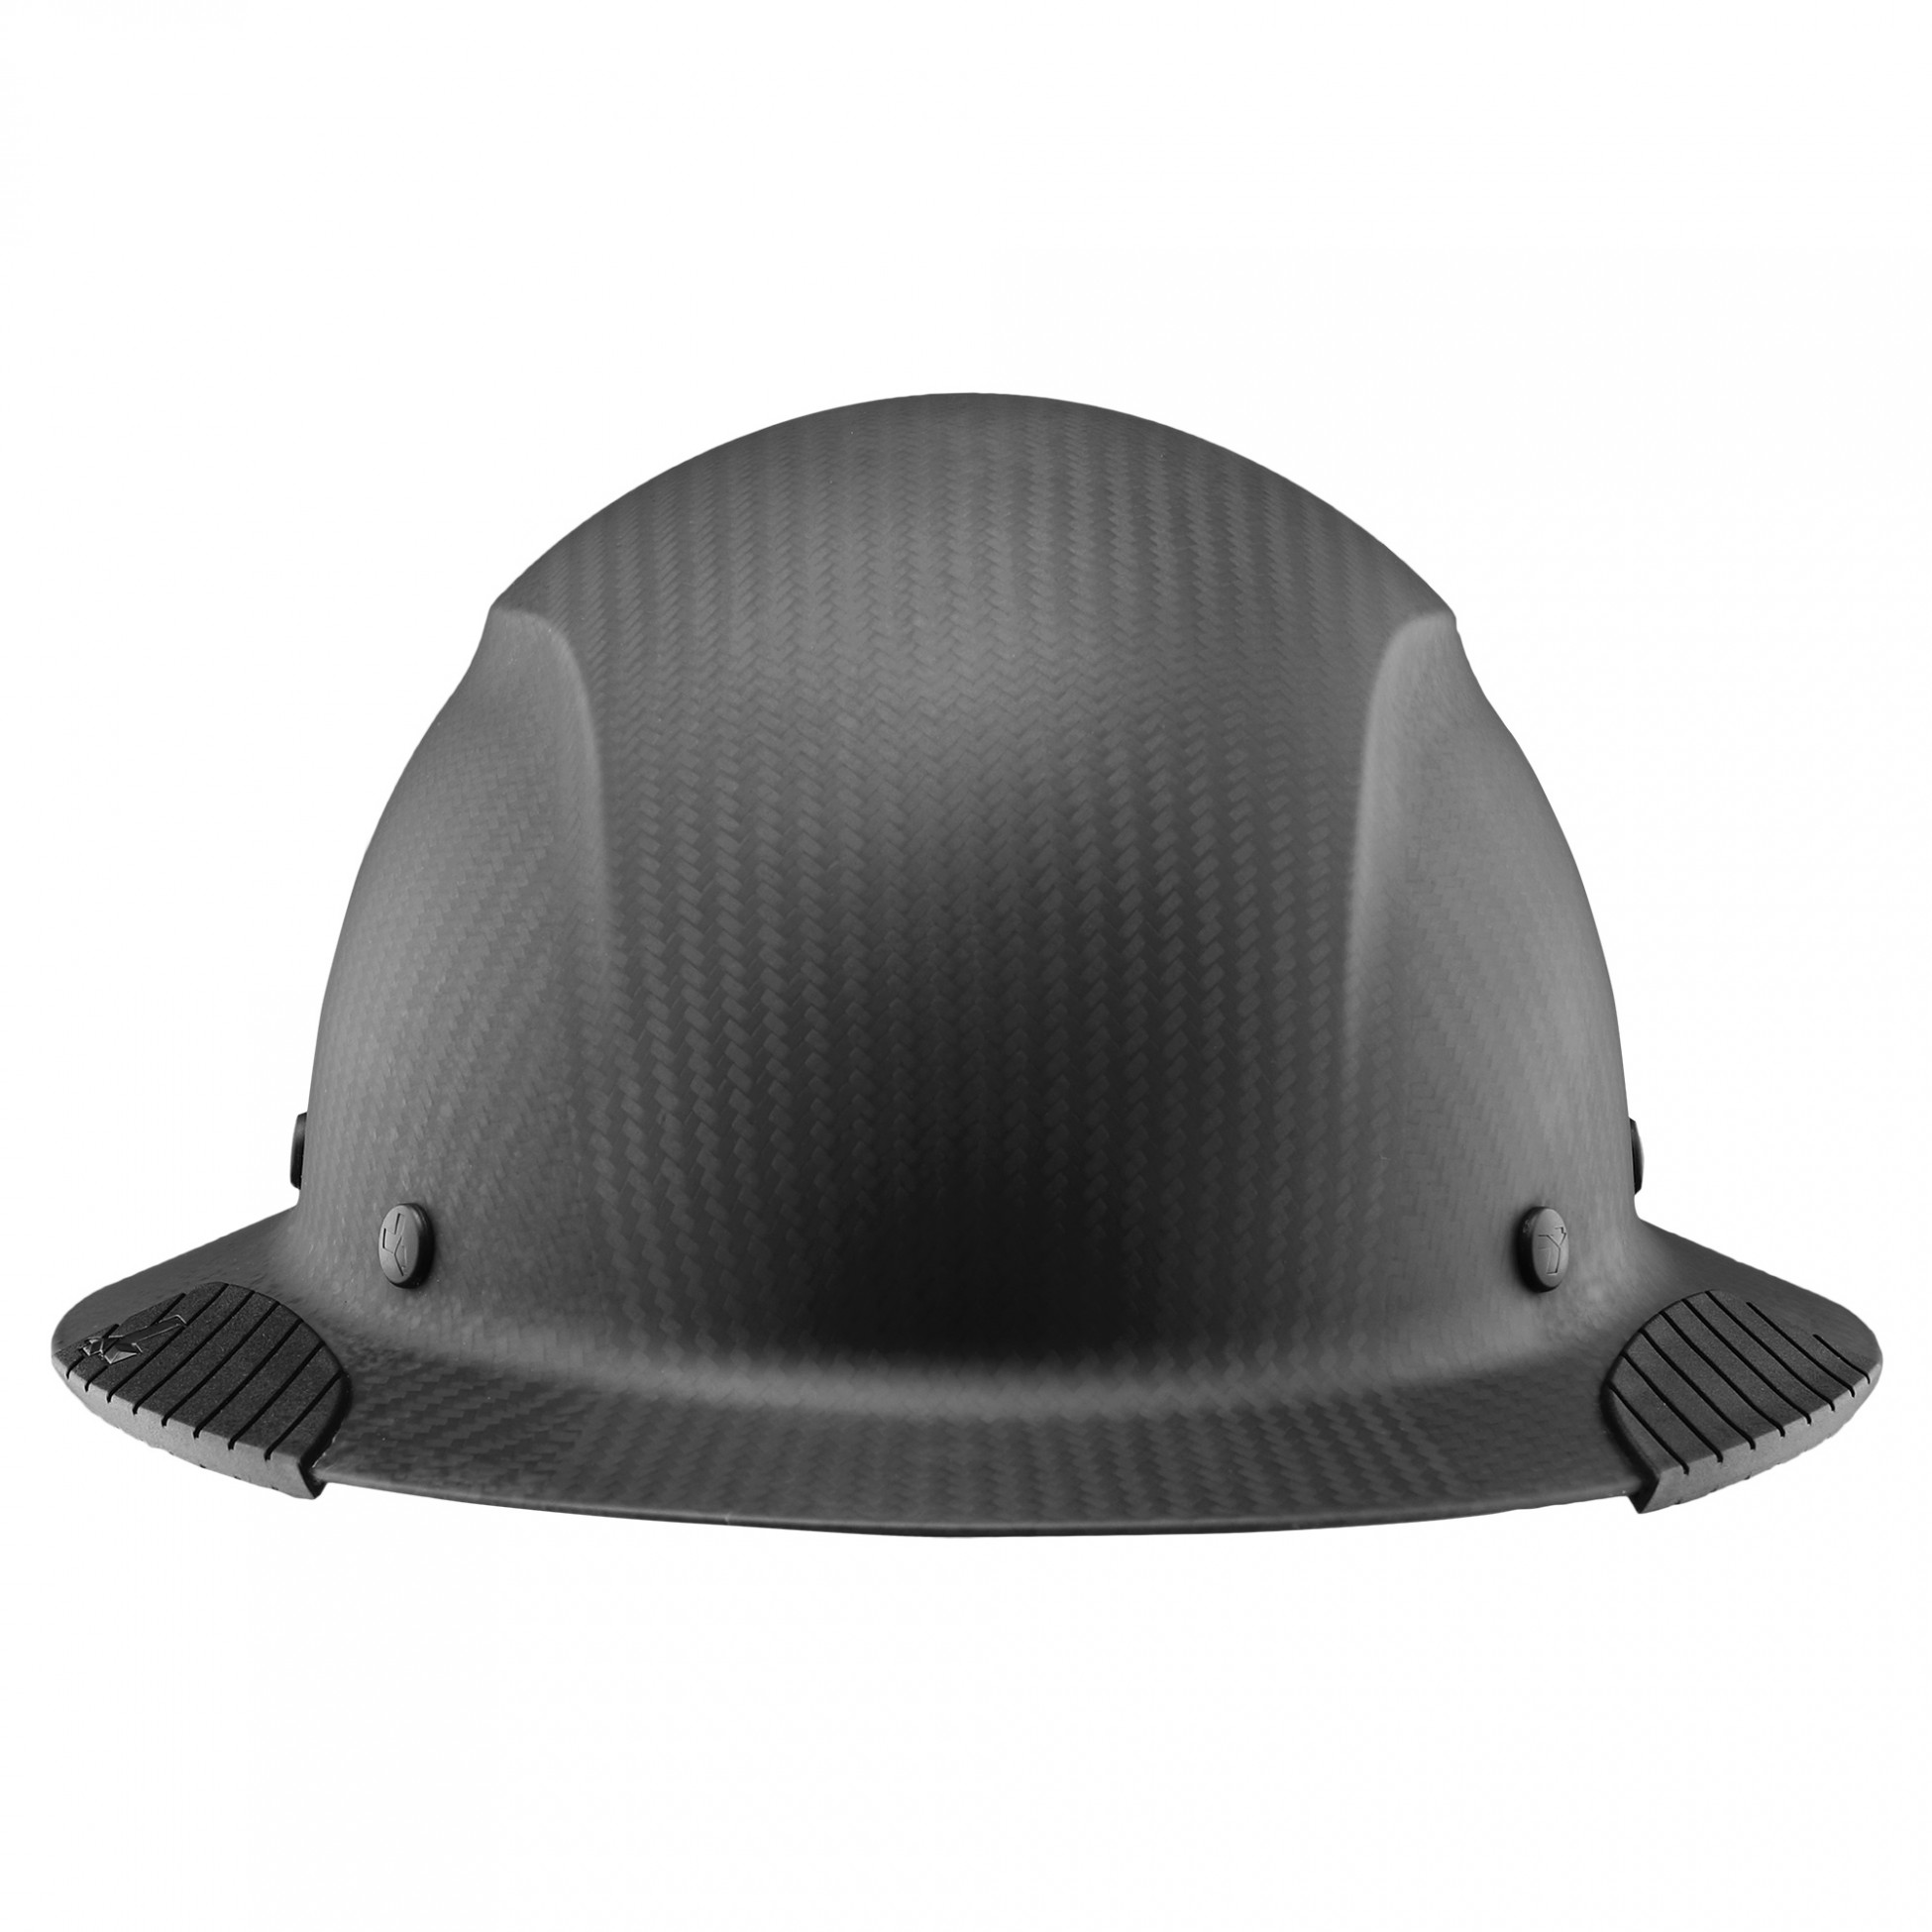 Lift Safety HDFM-17KG DAX Carbon Fiber Hard Hat w//Ratchet New Blemished Open Box